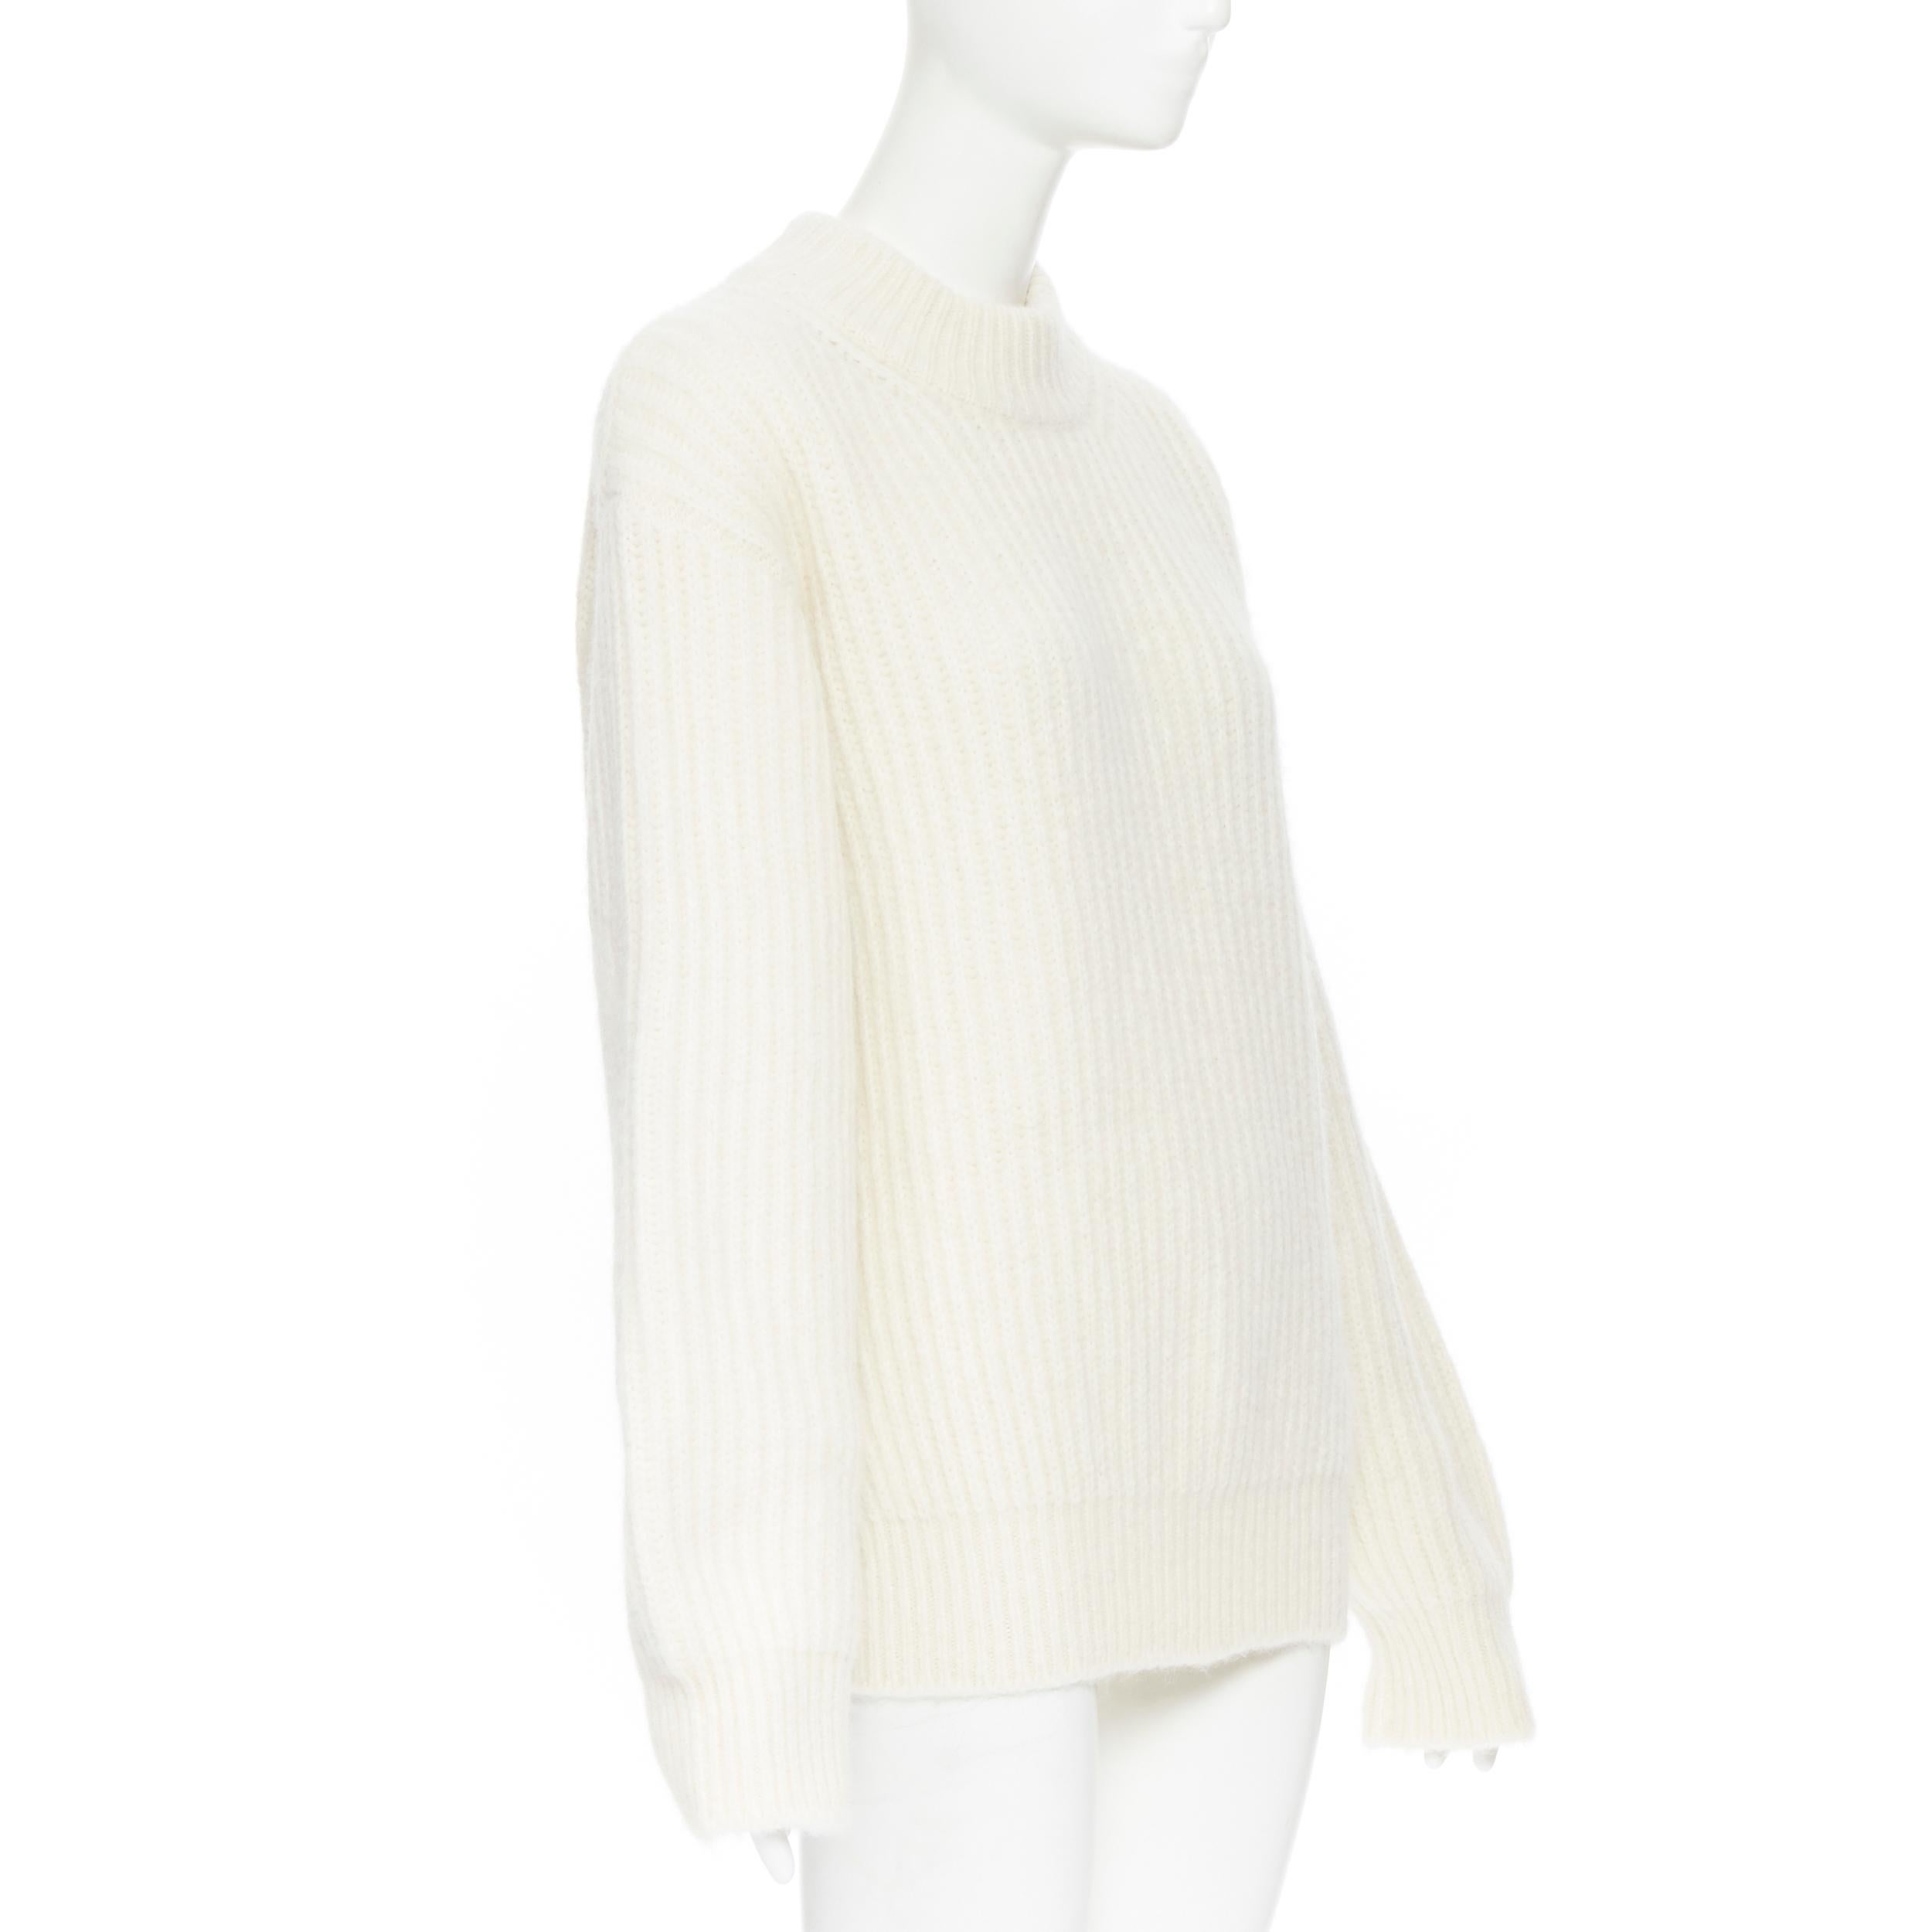 Beige new VICTORIA BECKHAM beige alpaca wool blend knit VB embroidered sweater Sz3 L